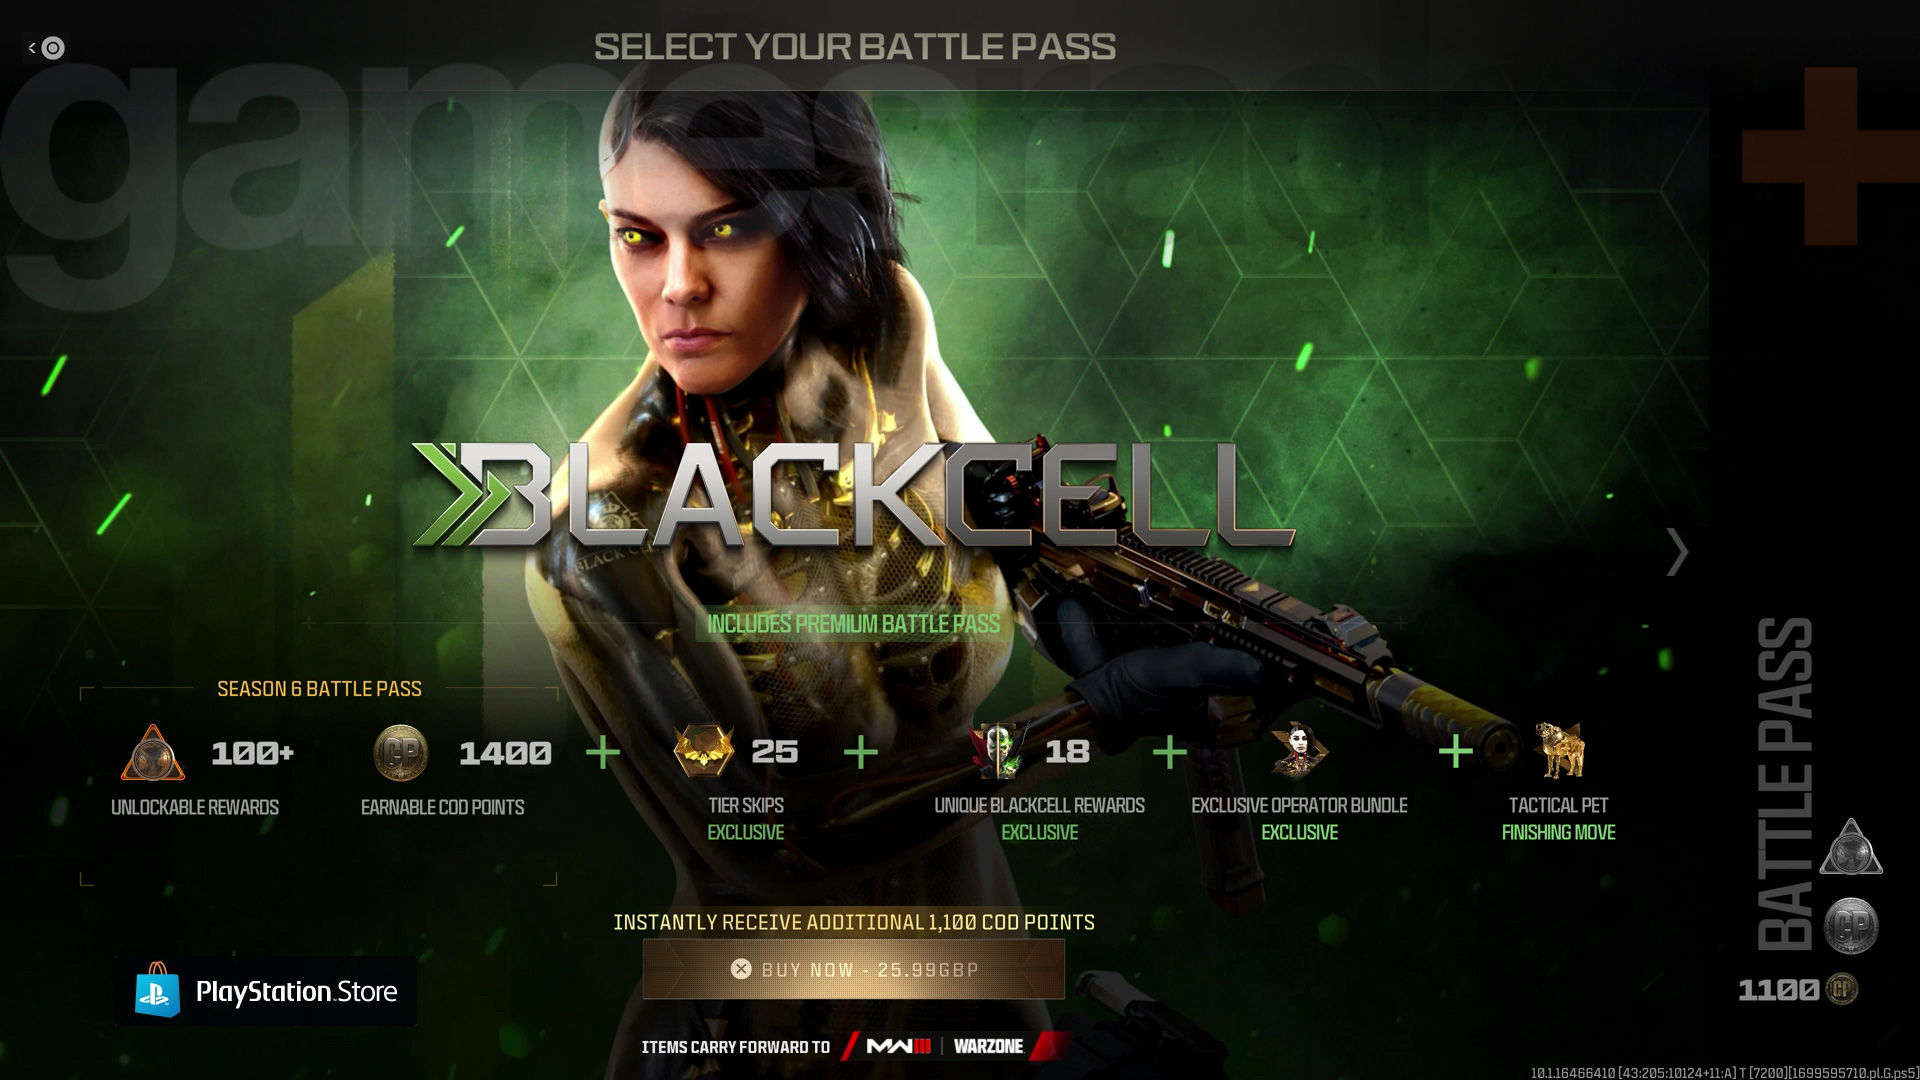 BlackCell Modern Warfare 3 Battle Pass Sezonul 1